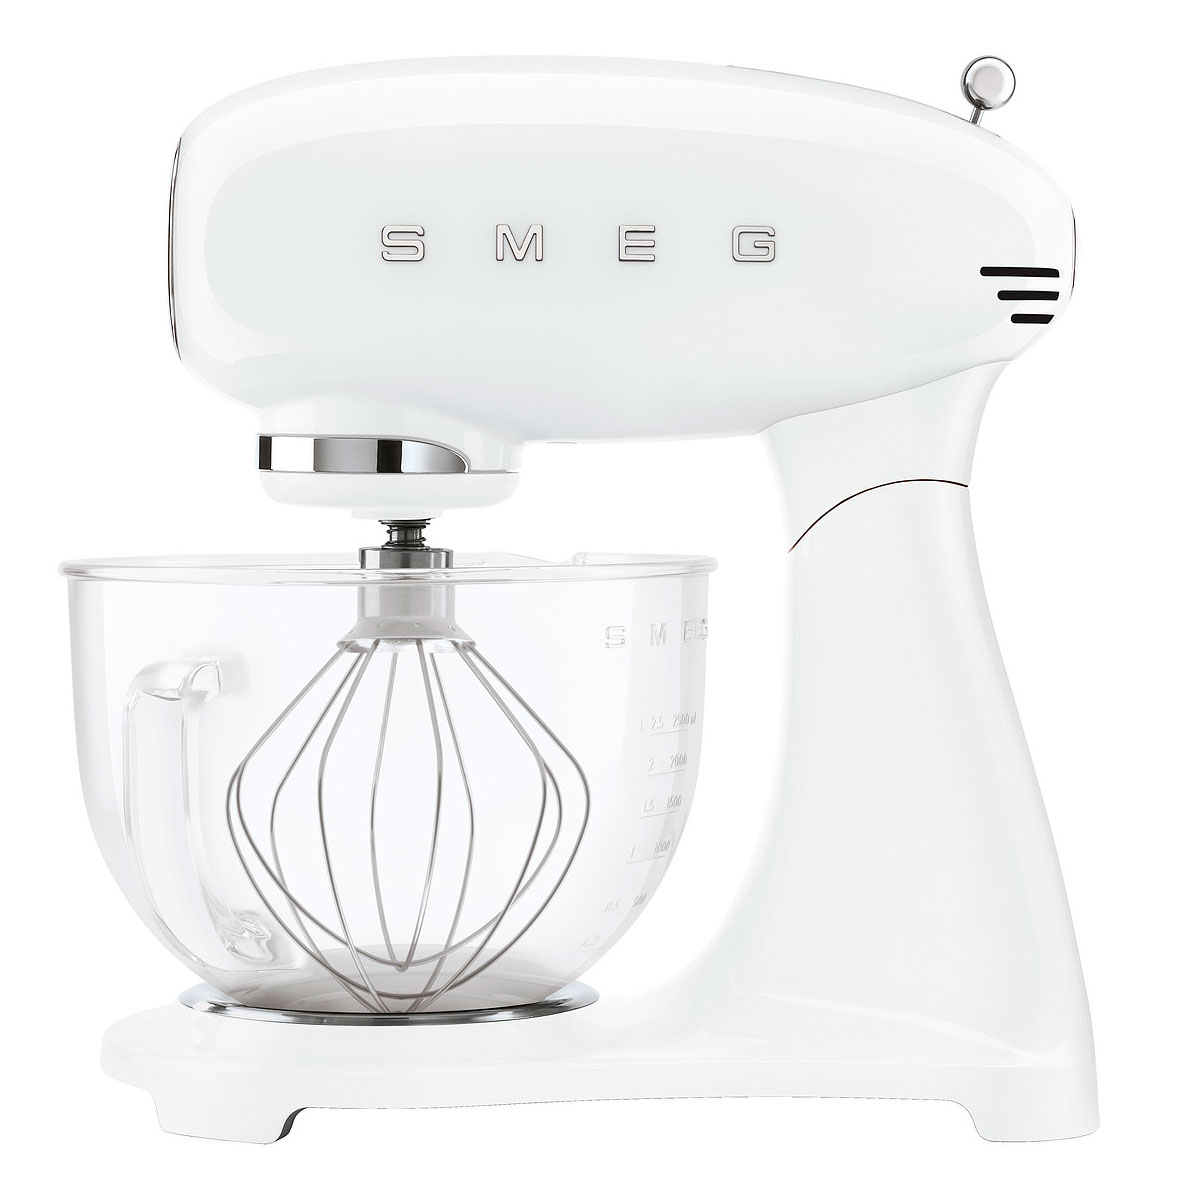 Smeg Kitchen Machine With Glass Bowl, White